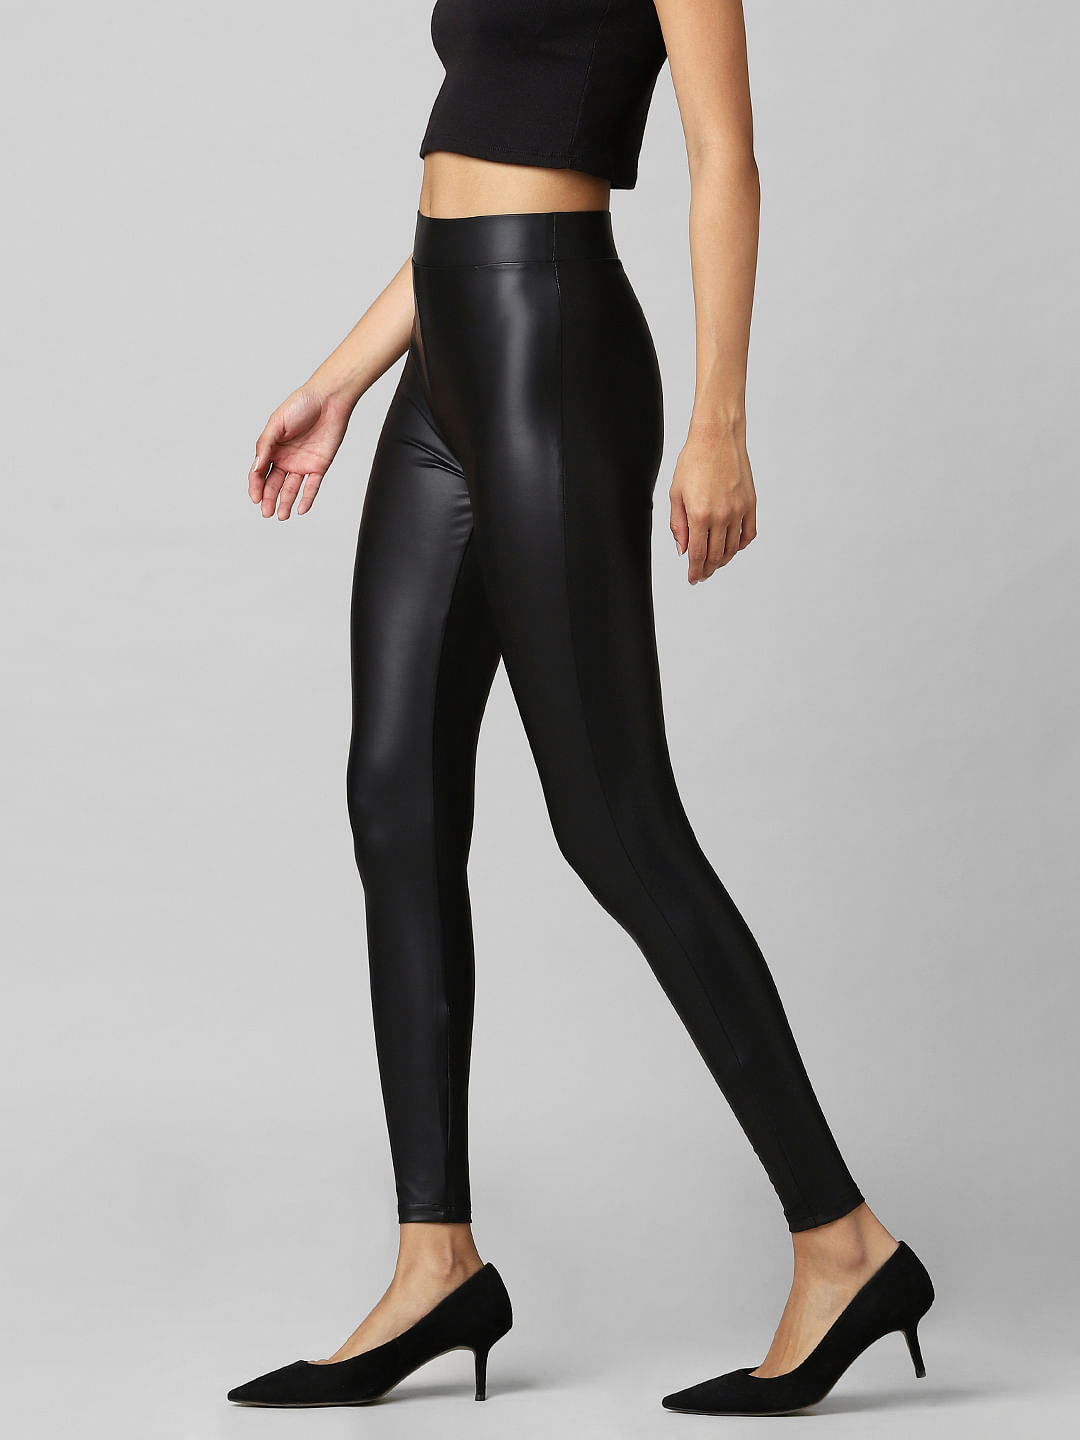 Topshop Sara Faux Leather Skinny Pants | Nordstrom